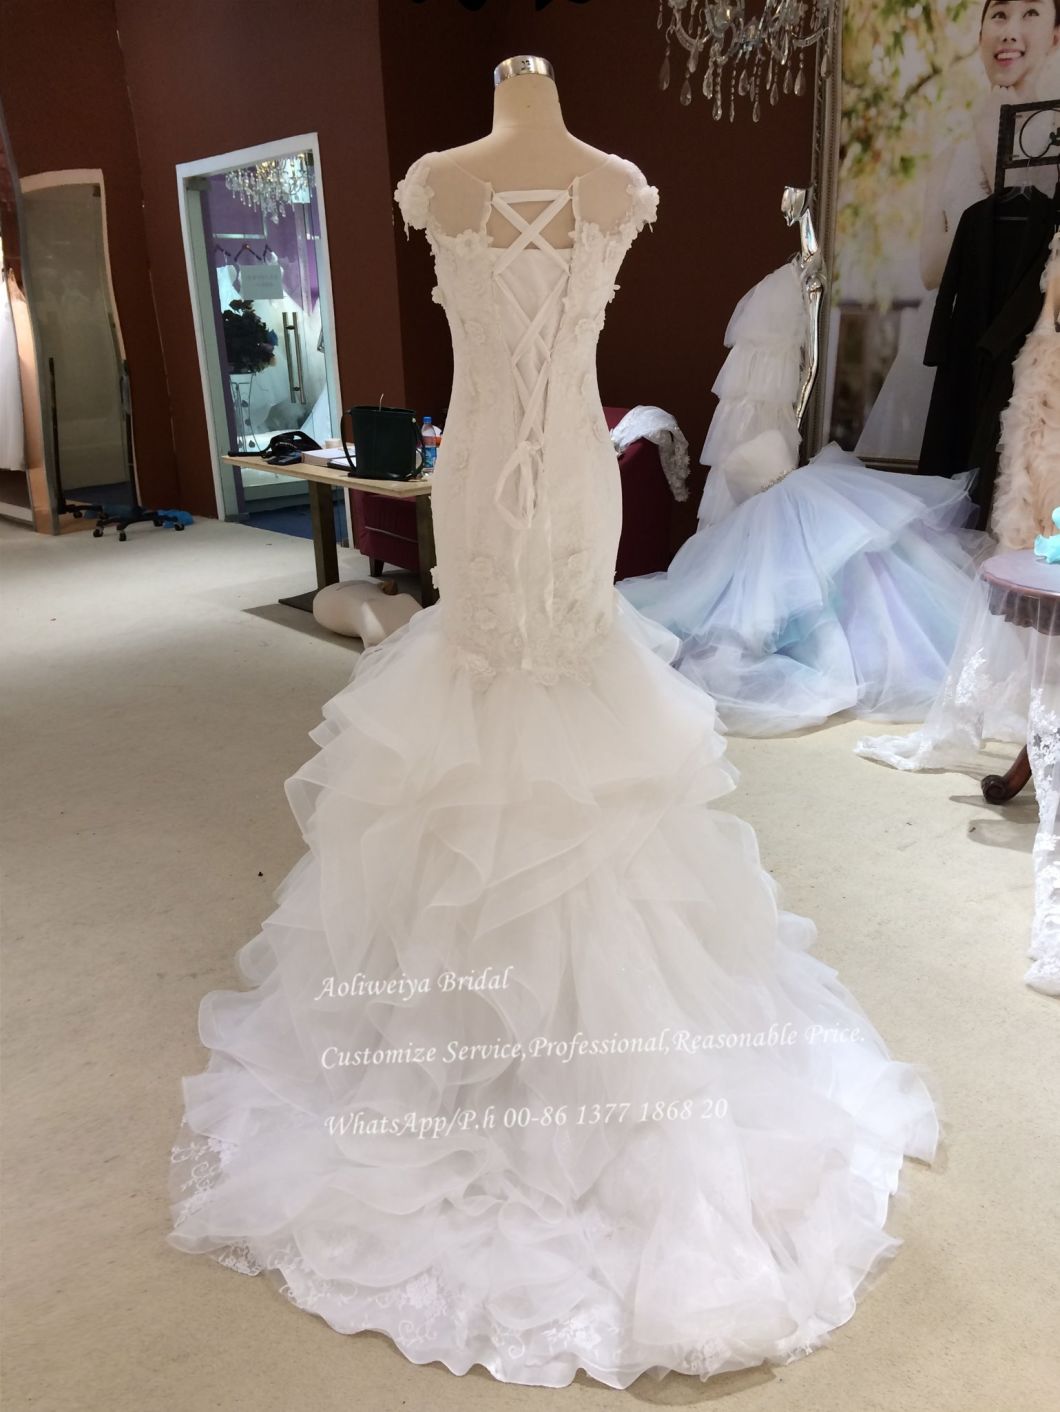 Aolanes Trumpet Design Destination Wedding Dress